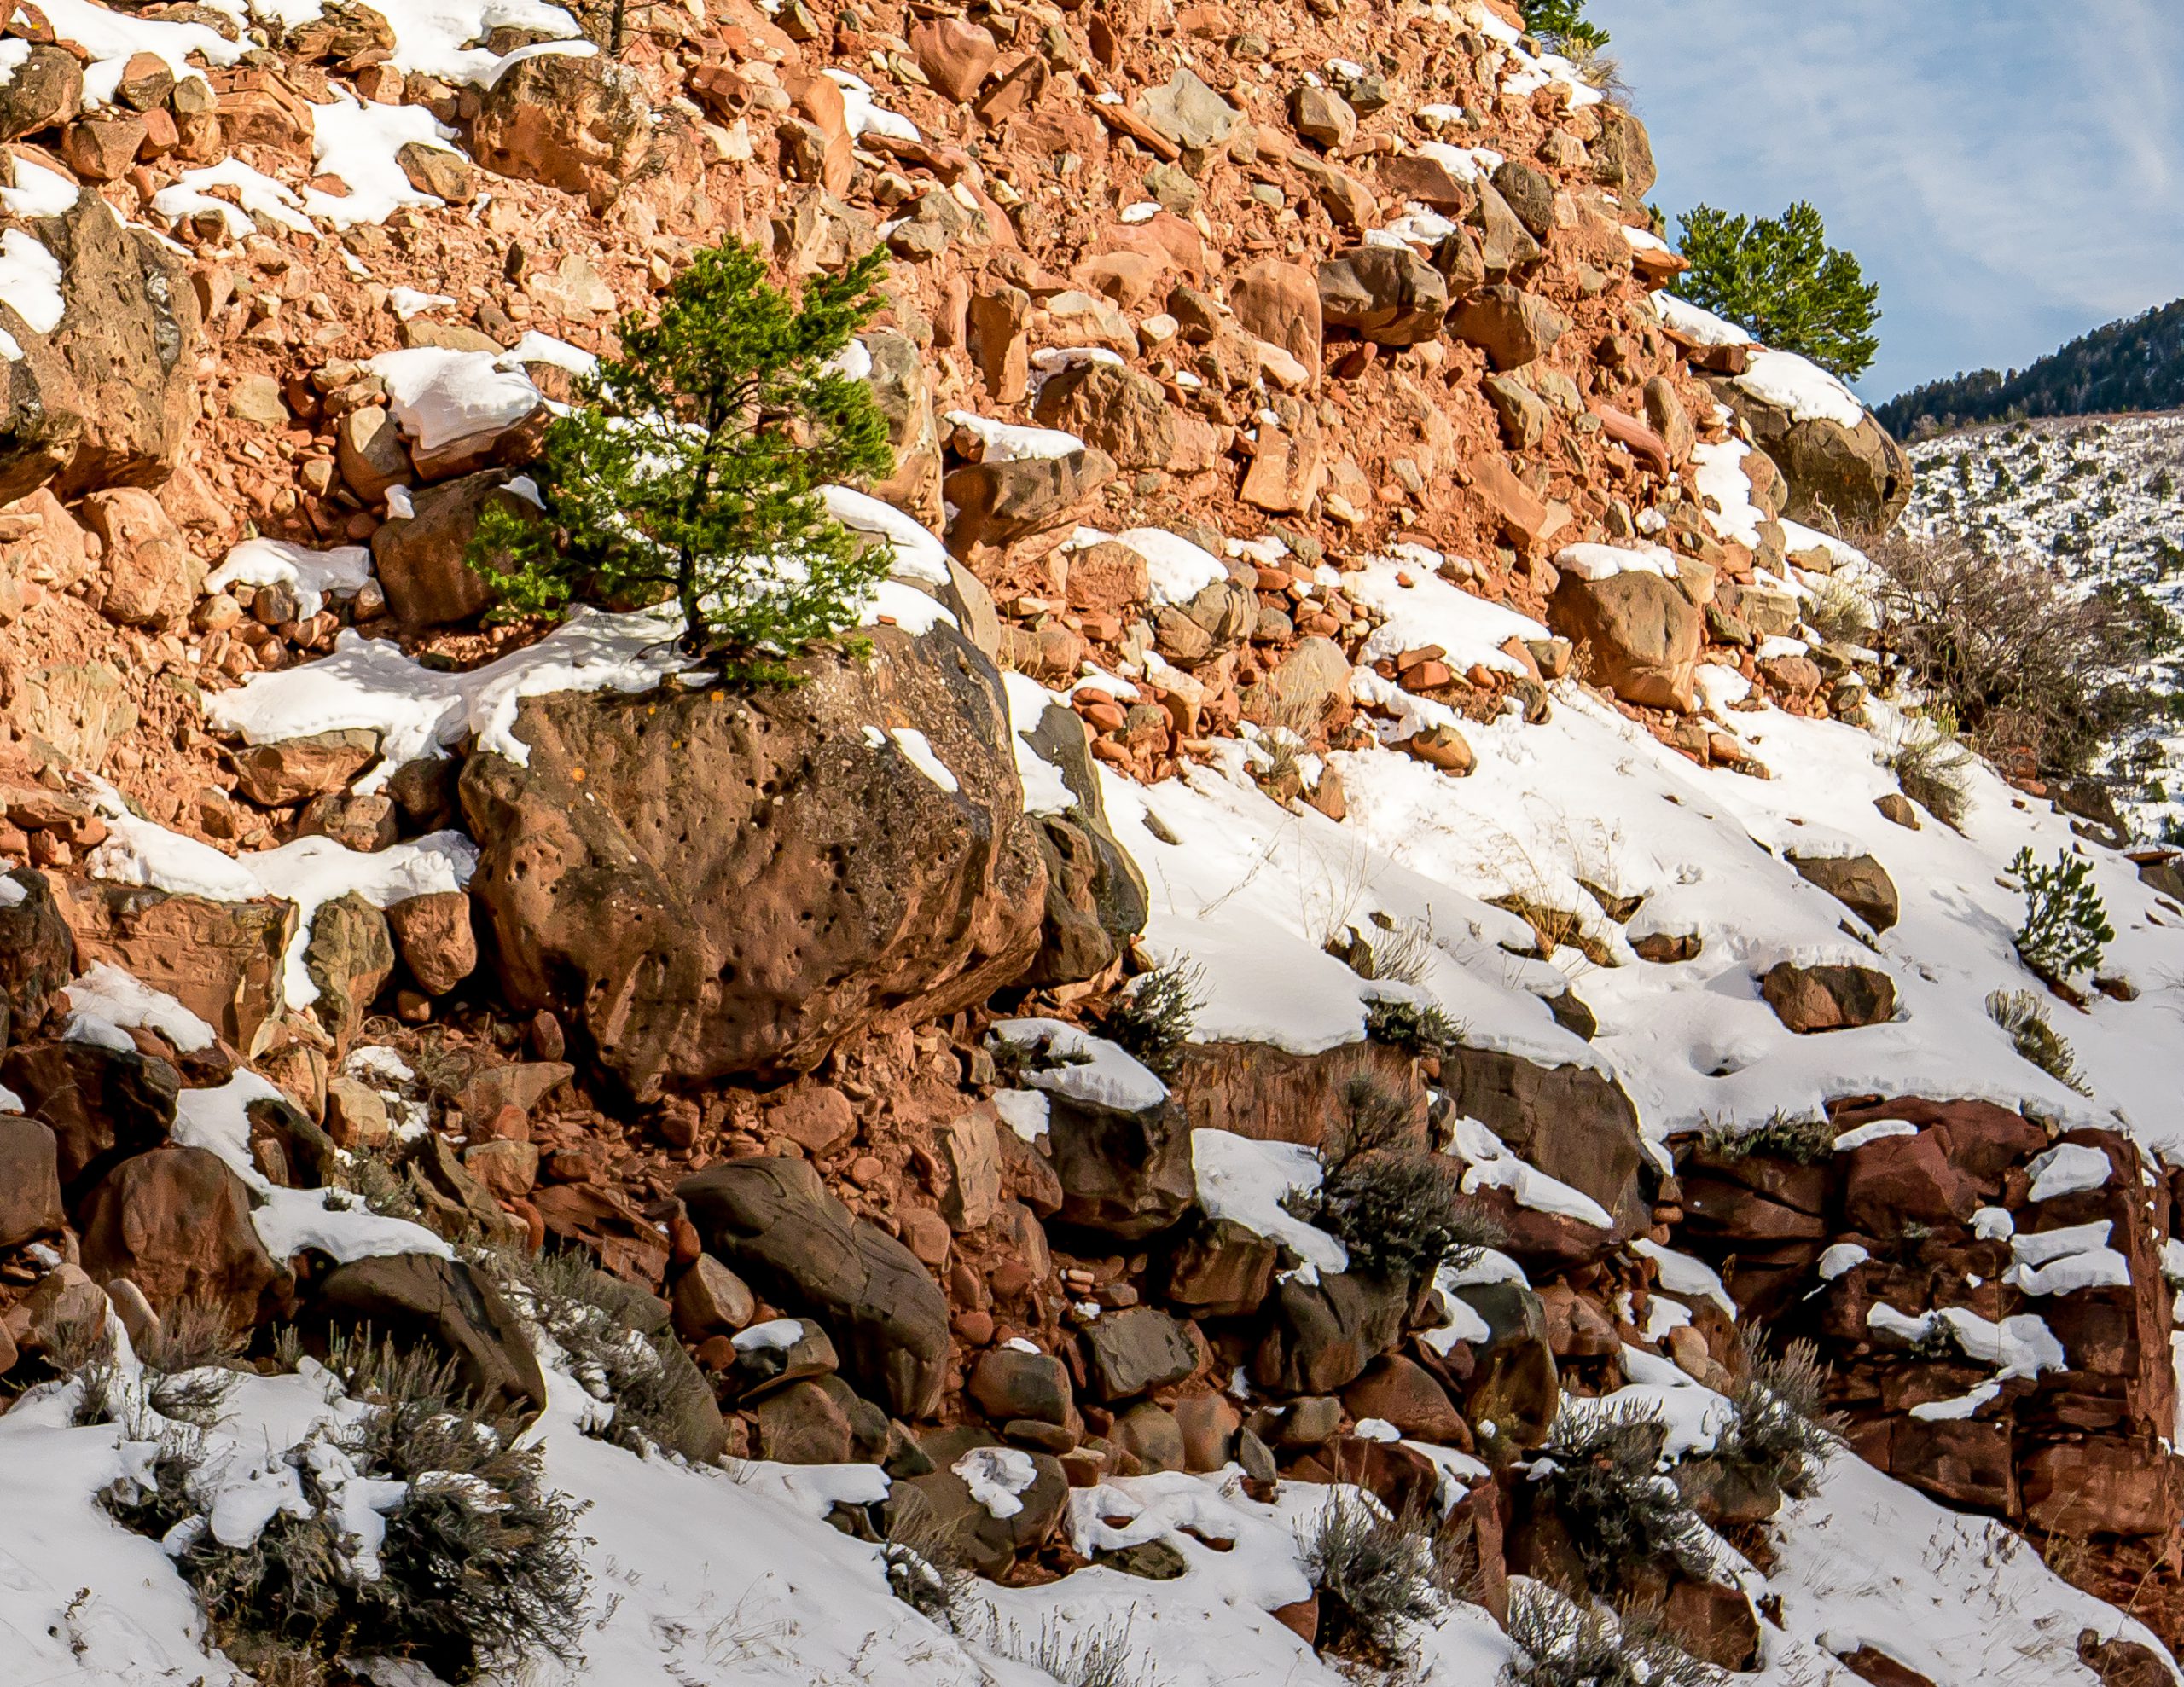 Tom Korologos - Tree in a Rock, Basalt, CO